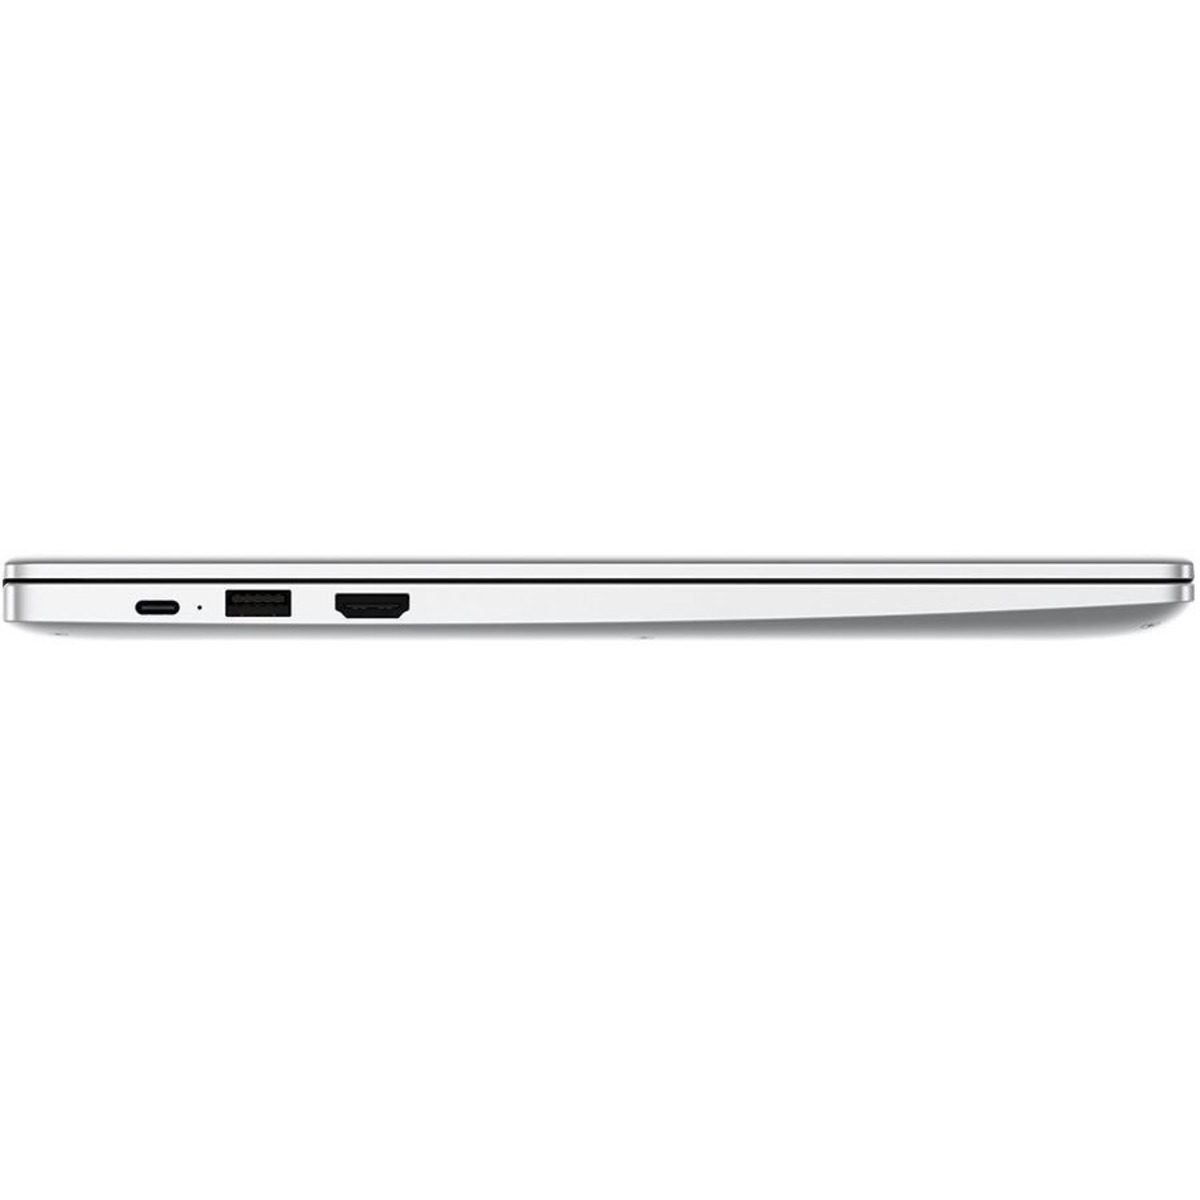 Ноутбук Huawei MateBook D 15 BOD-WDI9 (Intel Core i3 1115G4 3.0Ghz/8Gb DDR4/SSD 256Gb/Intel UHD Graphics/15.6